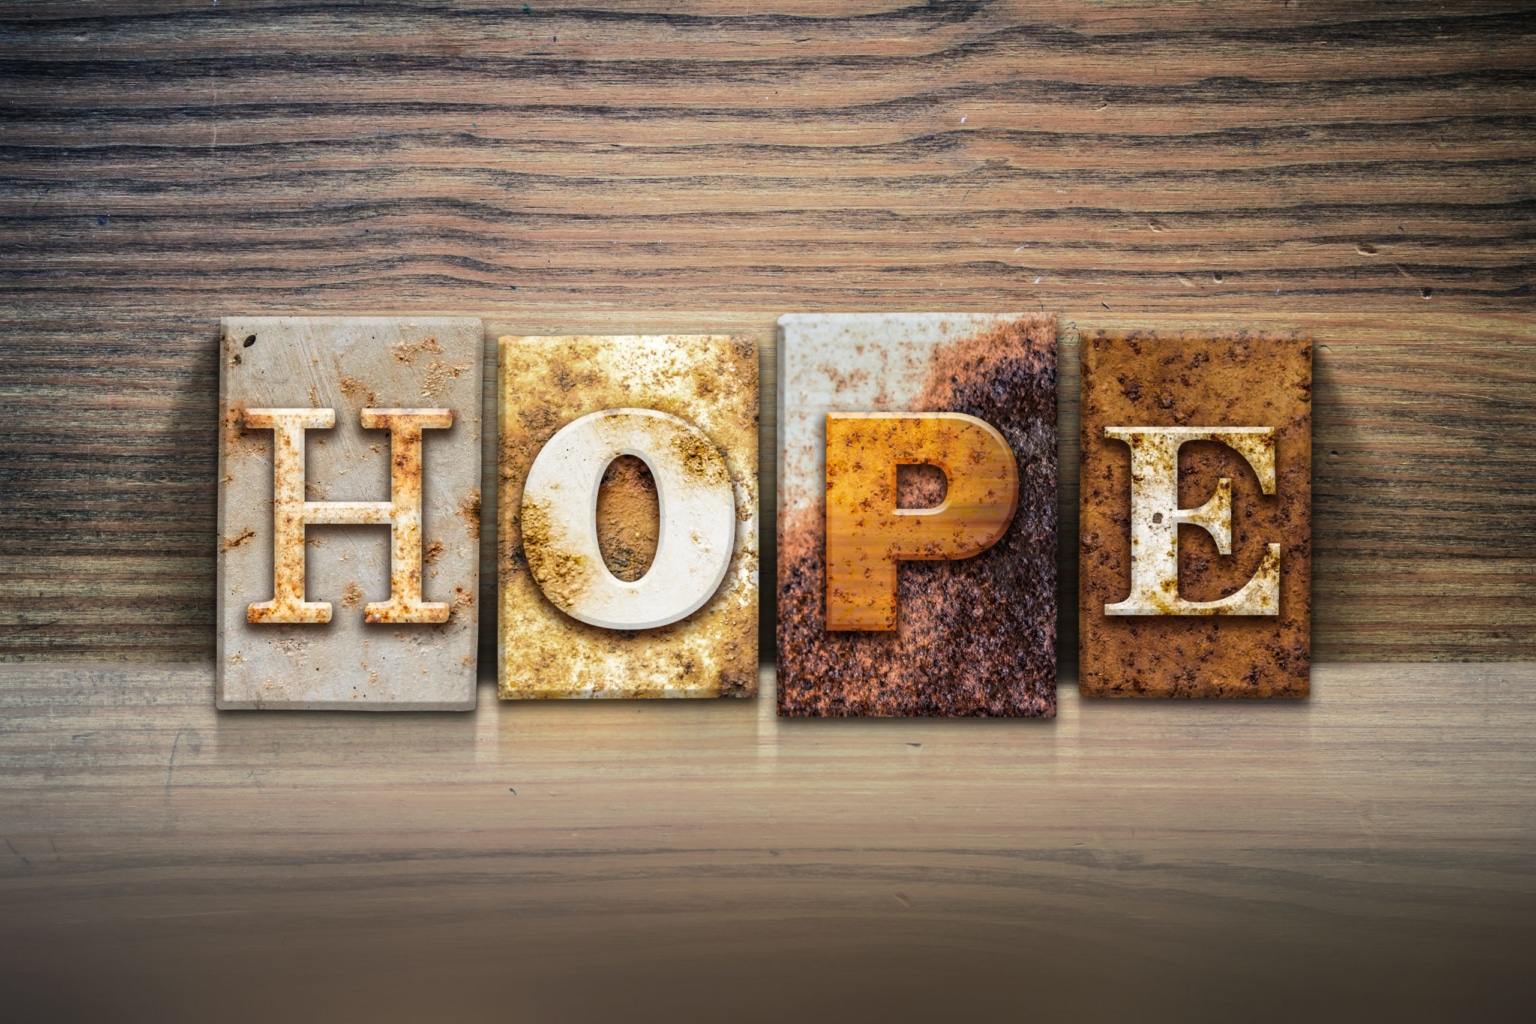 The word "HOPE" written in rusty metal letterpress type sitting on a wooden ledge background.